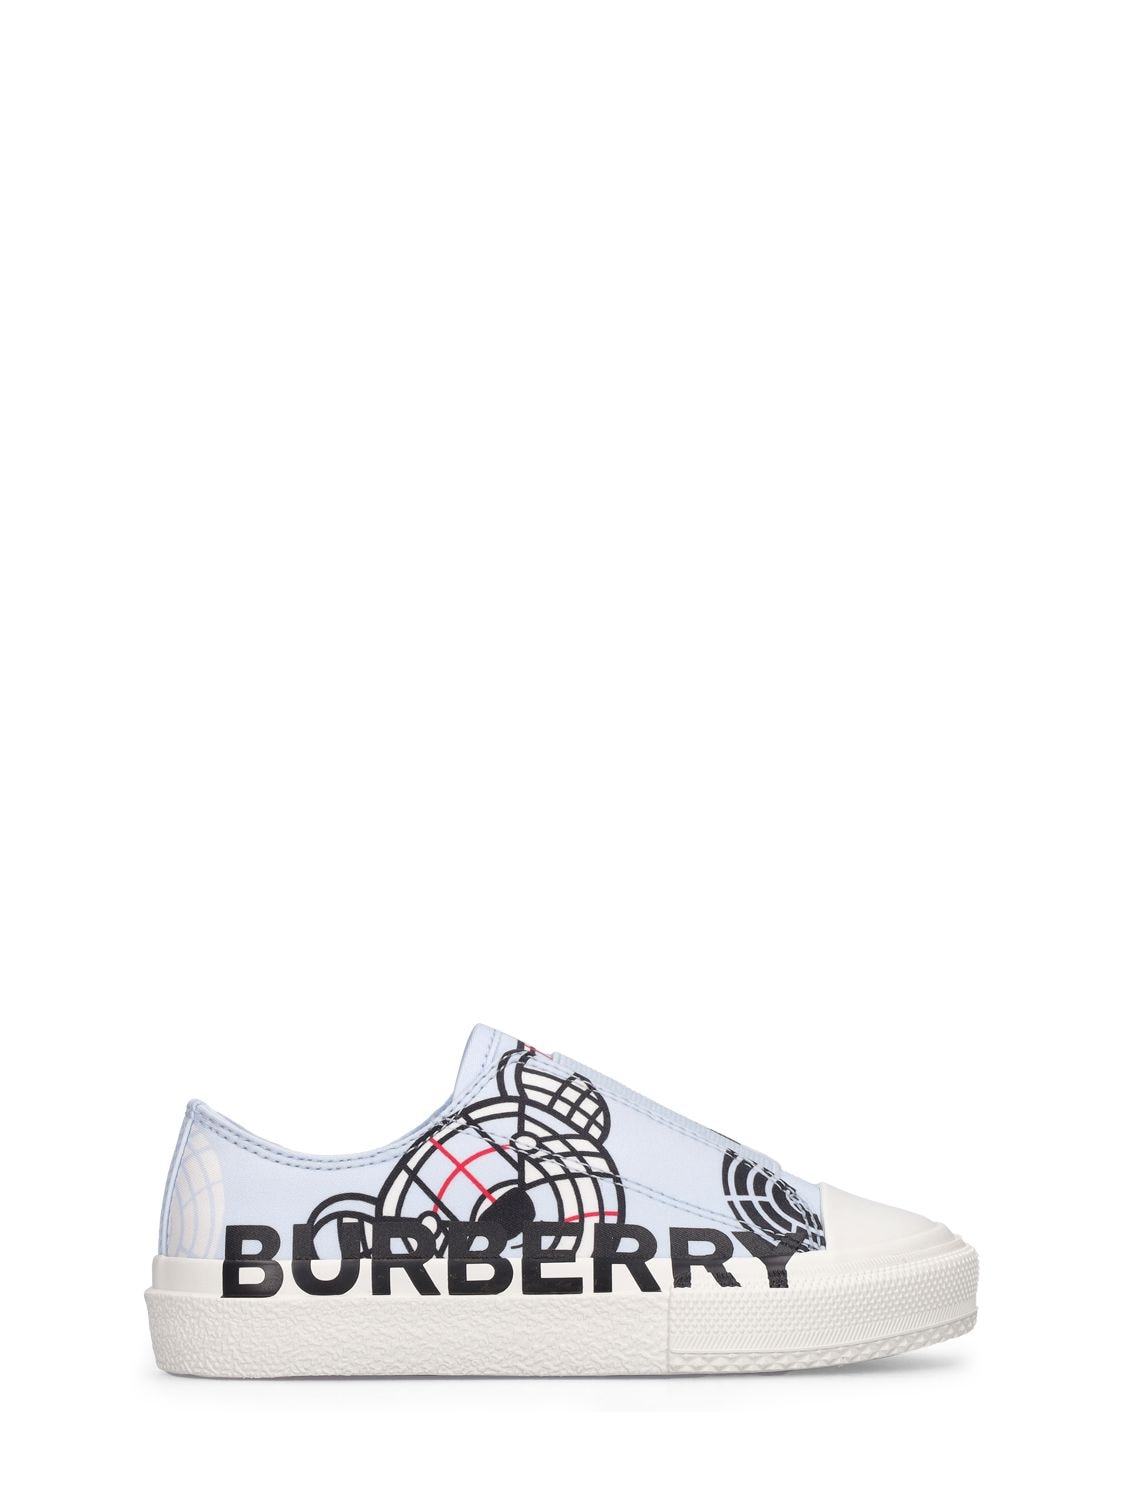 Bear Print Cotton Slip-on Sneakers - BURBERRY - Modalova